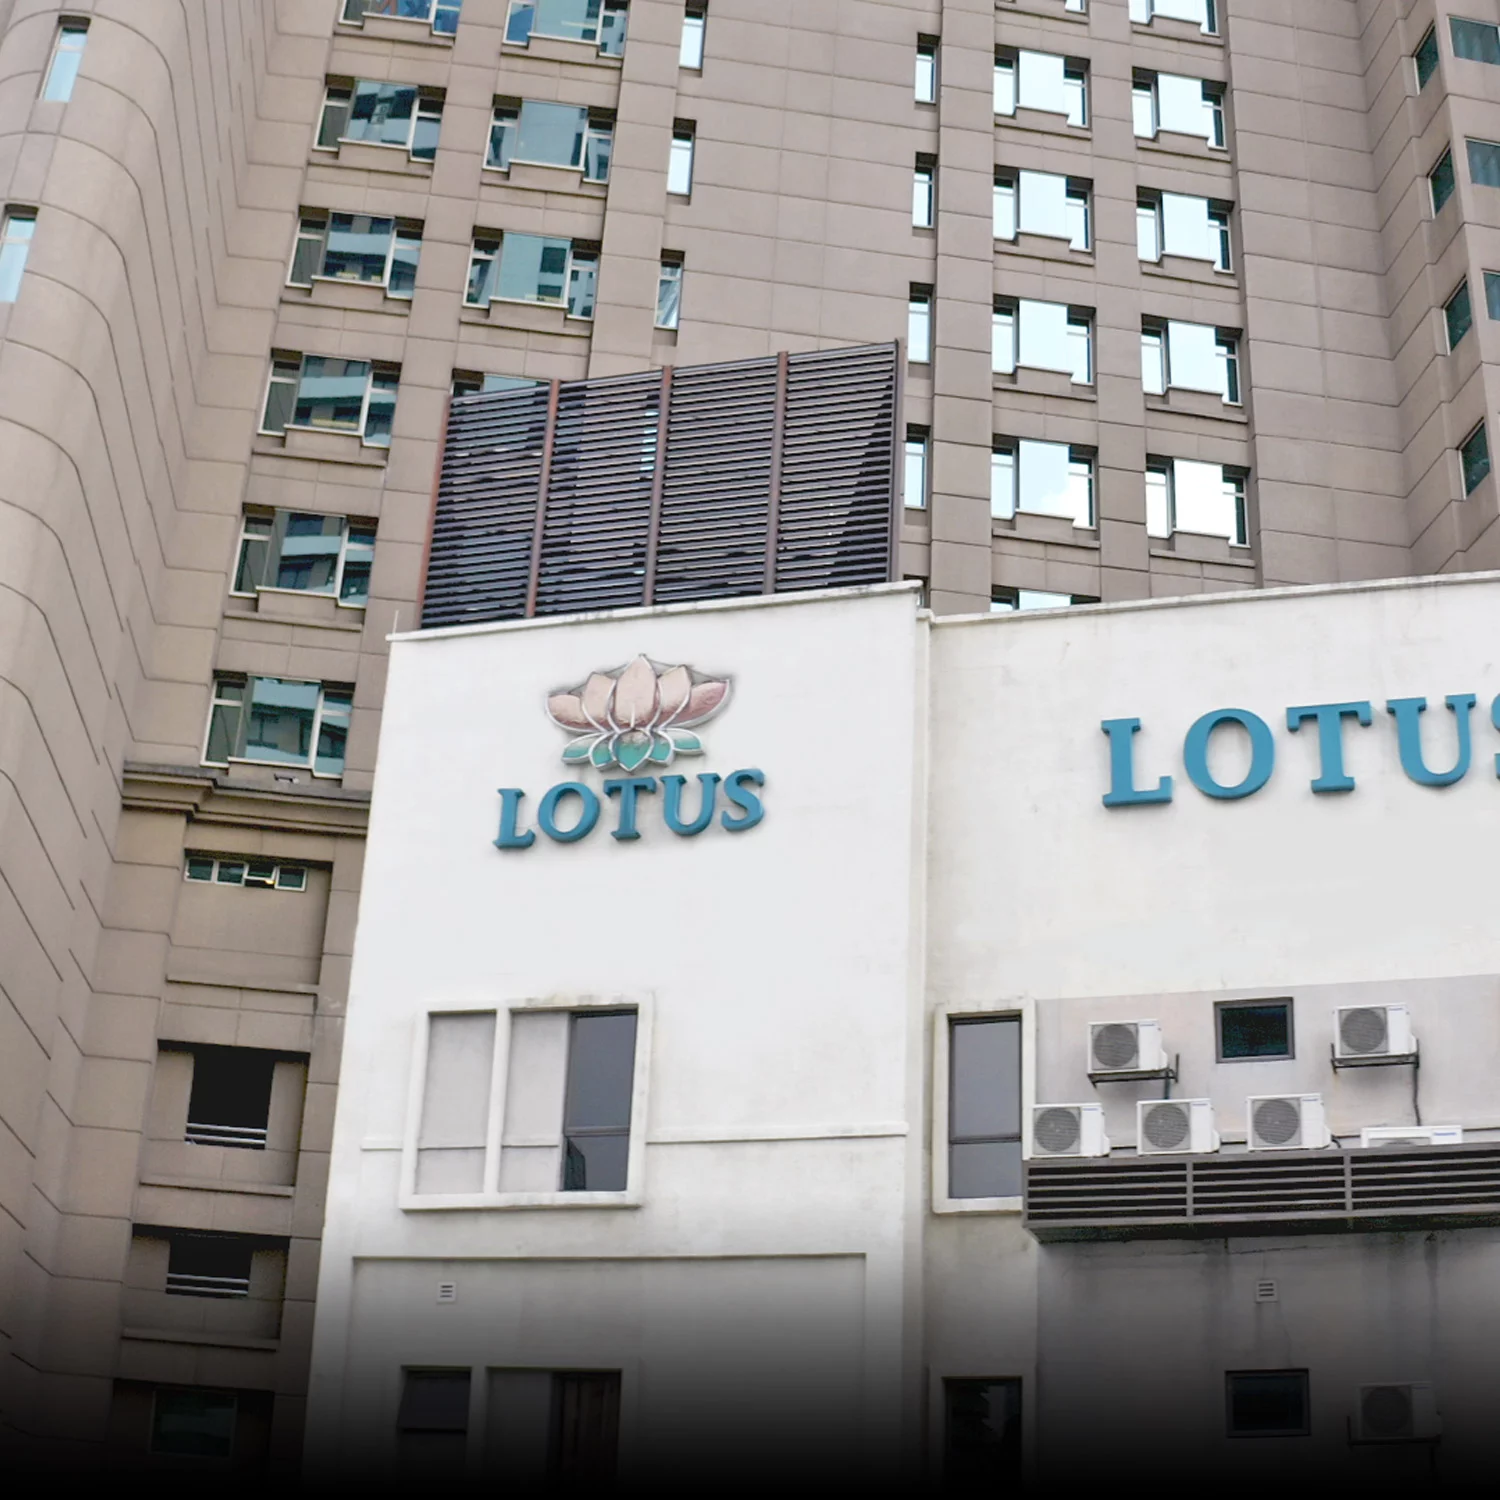 Lotus Hotel BG - Hotels And Resorts Page 1